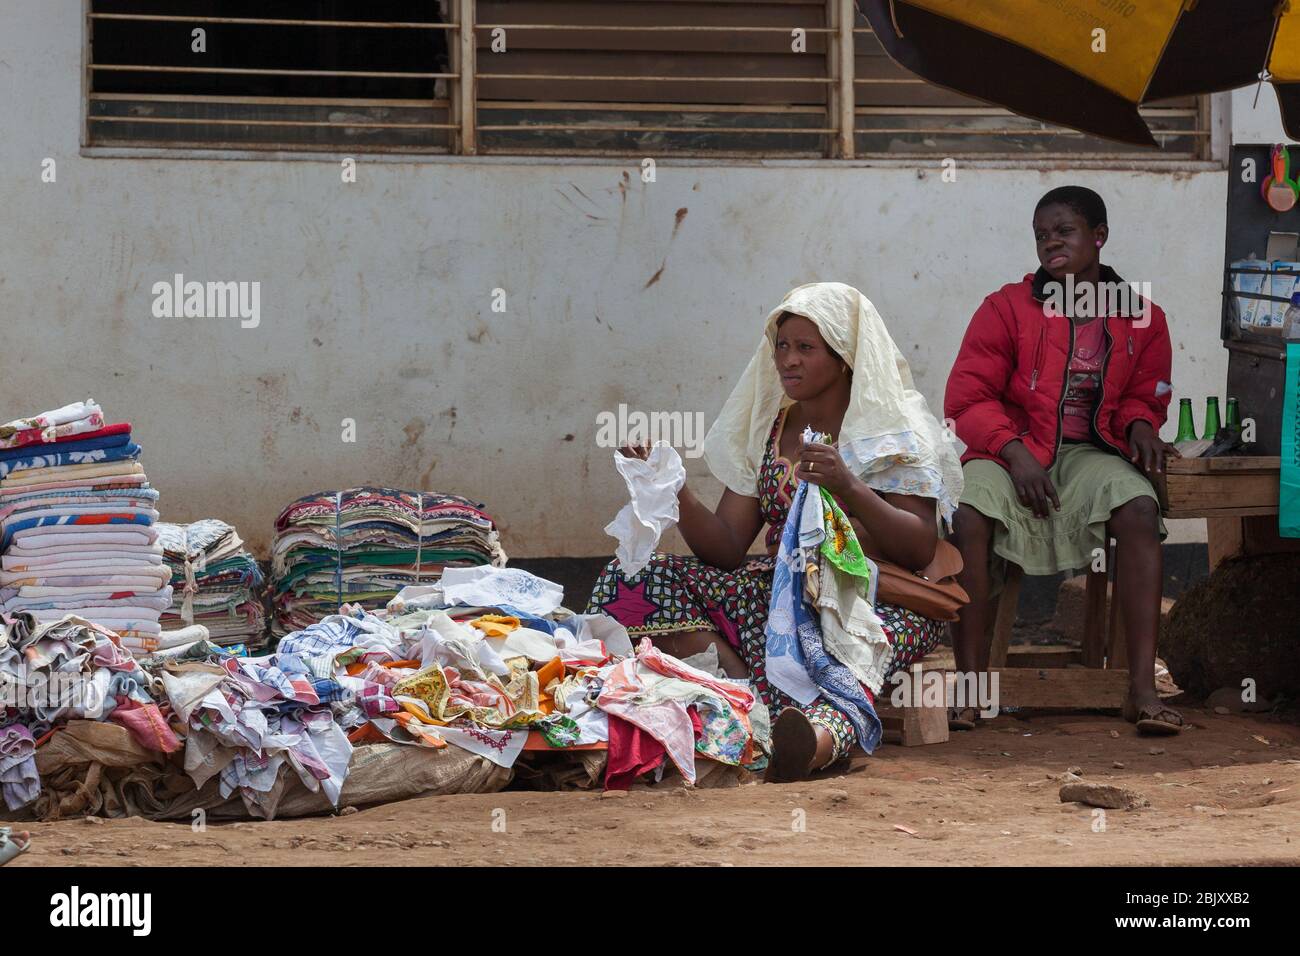 Bukavu, Demokratische Republik Kongo : Afrikanische kongolesische Frauen in bunten traditionellen Kleidung lokalen Markt Handel Stockfoto